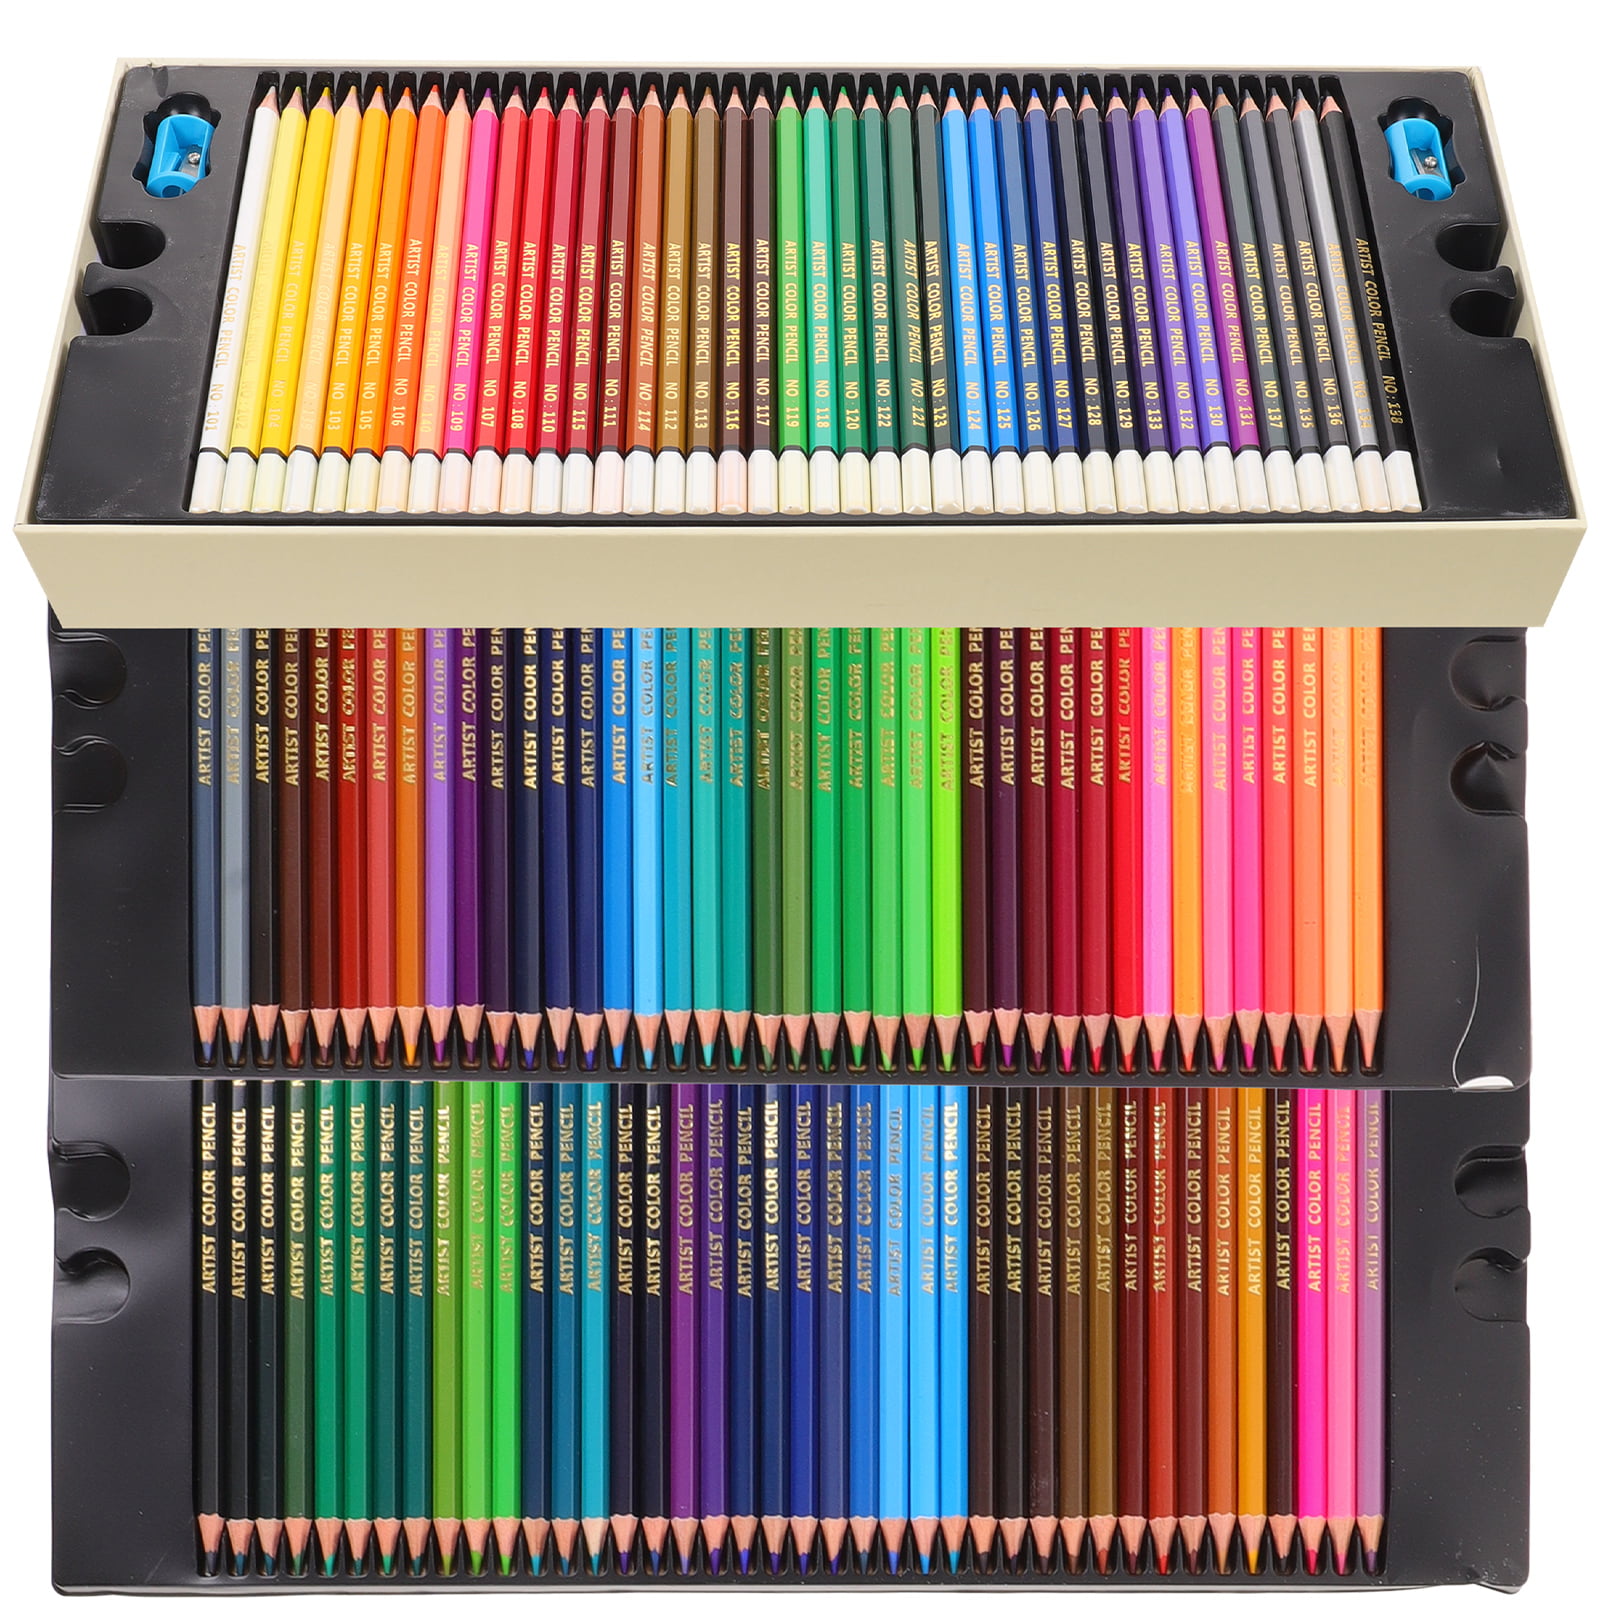 K9006 - Kids Colored Pencil Set